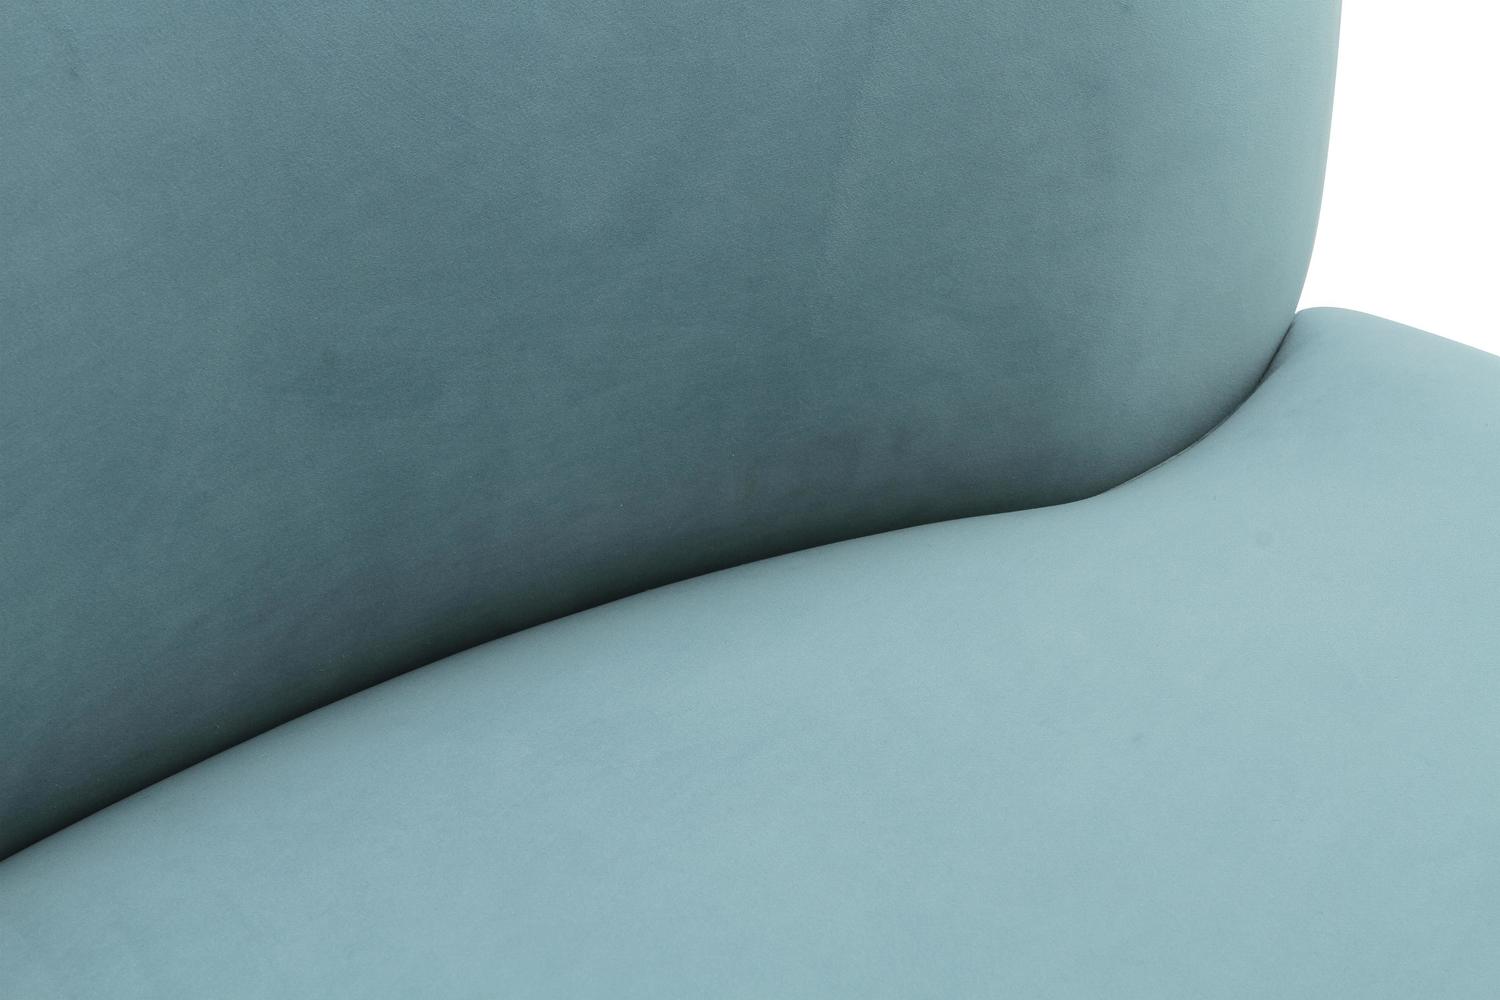 black and grey couch Contemporary Design Furniture Sofas Bluestone